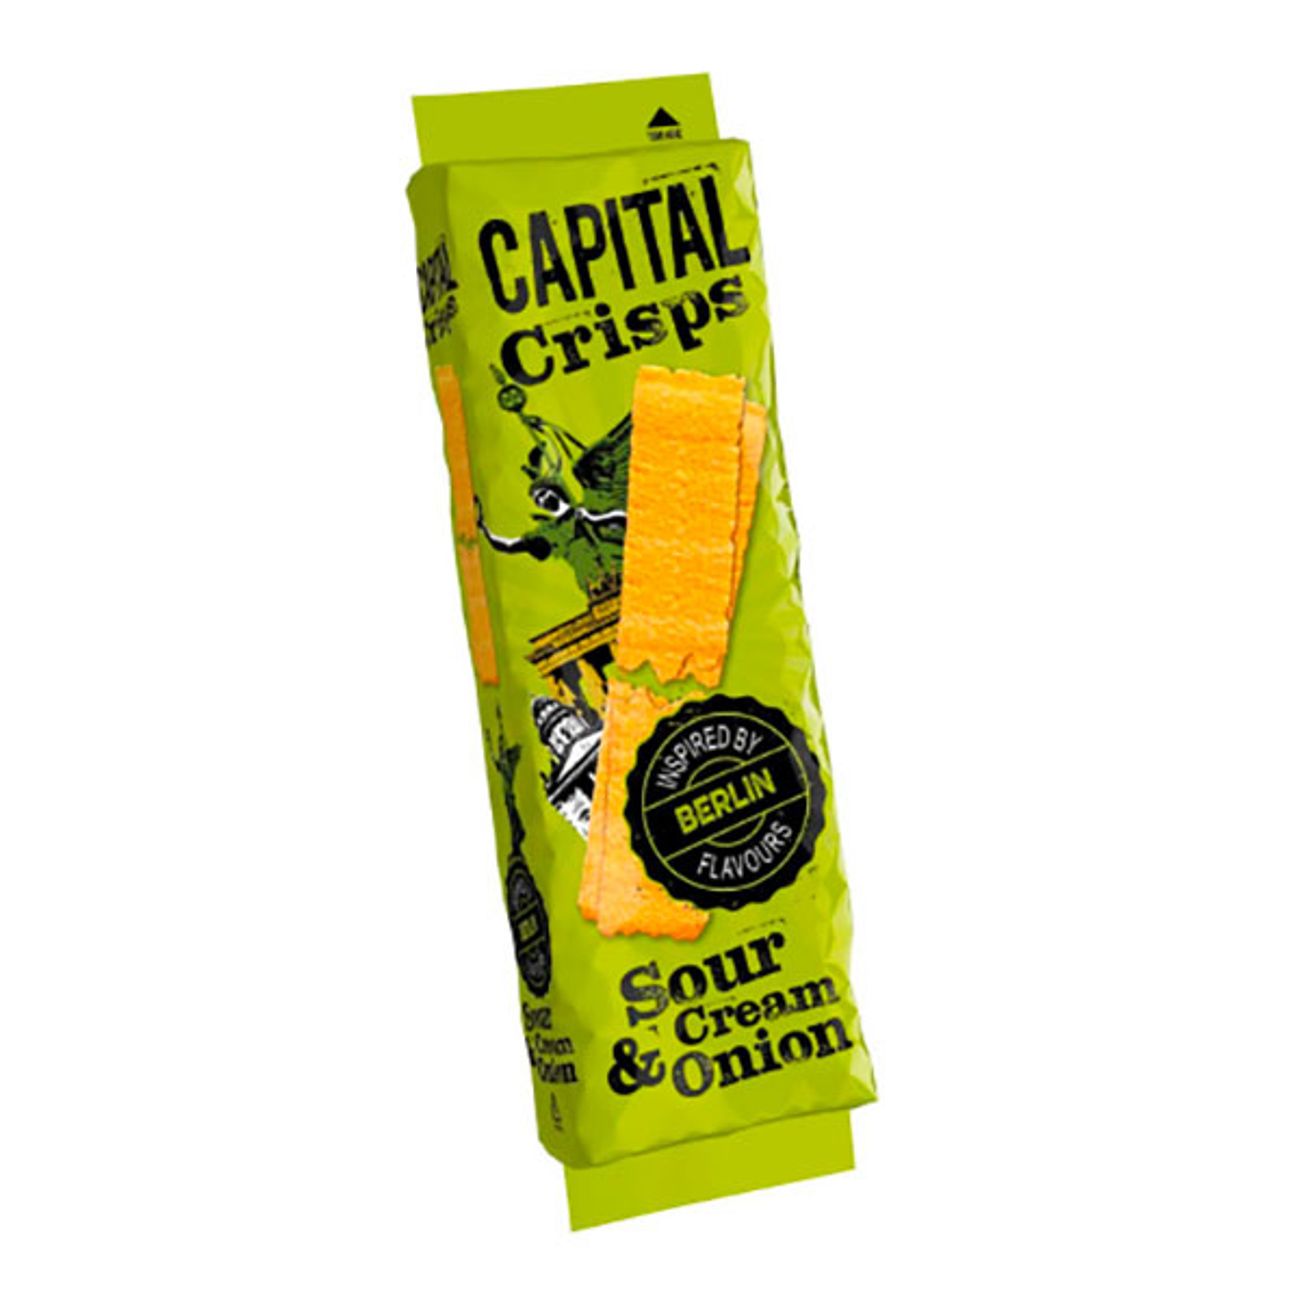 capital-crisps-sourcream-onion-72990-1